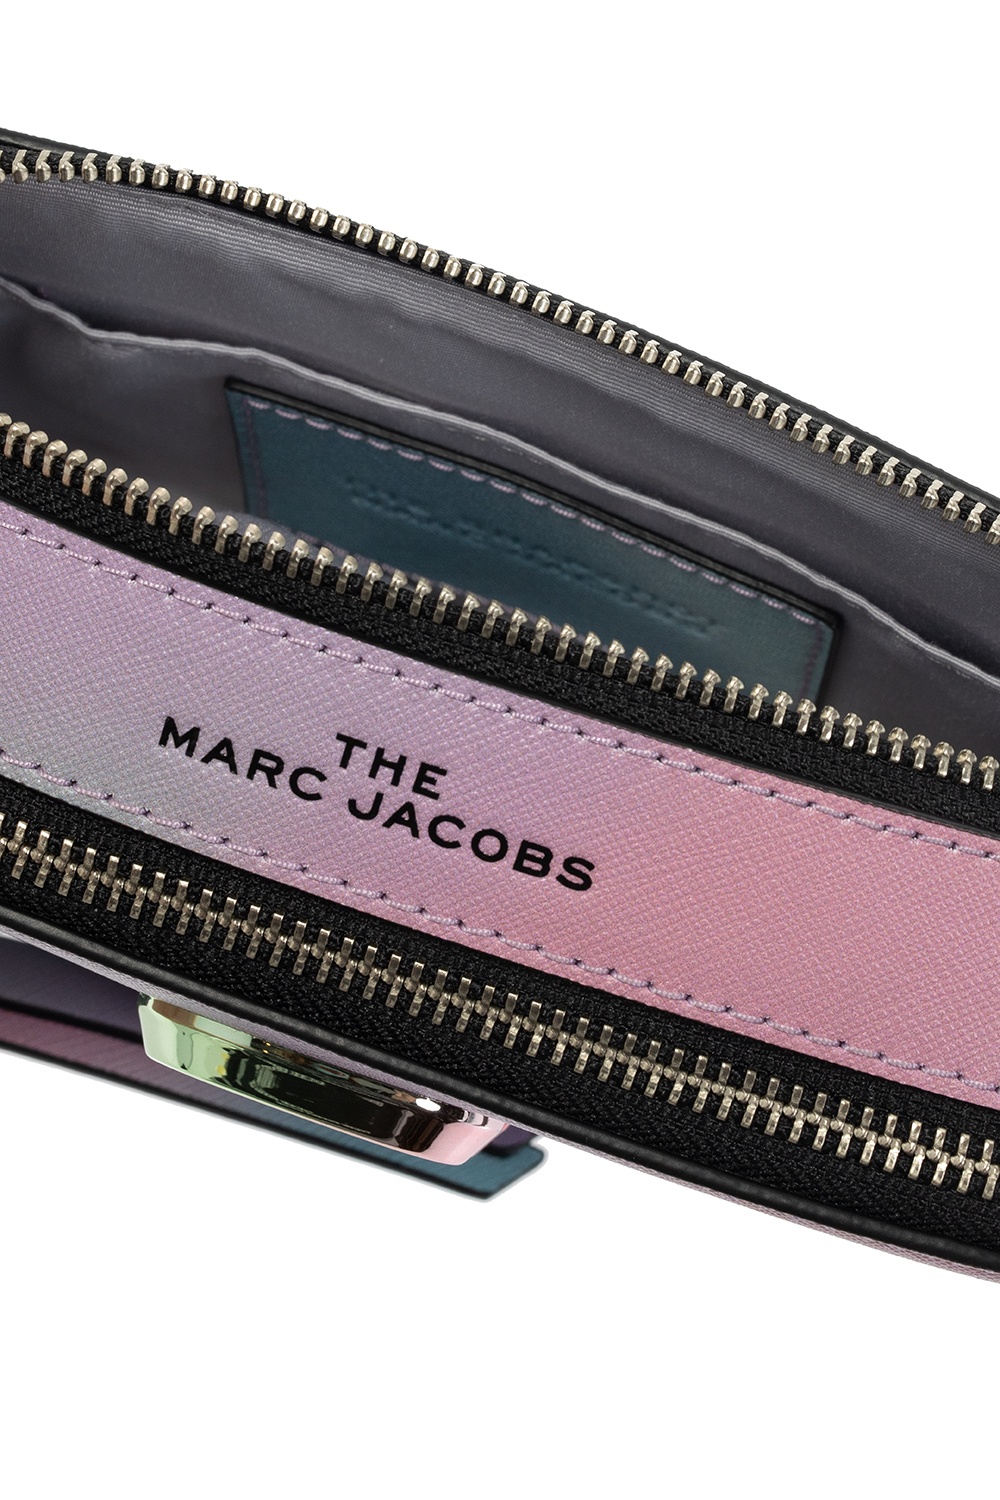 Marc Jacobs Women's The Snapshot Airbrush Bag